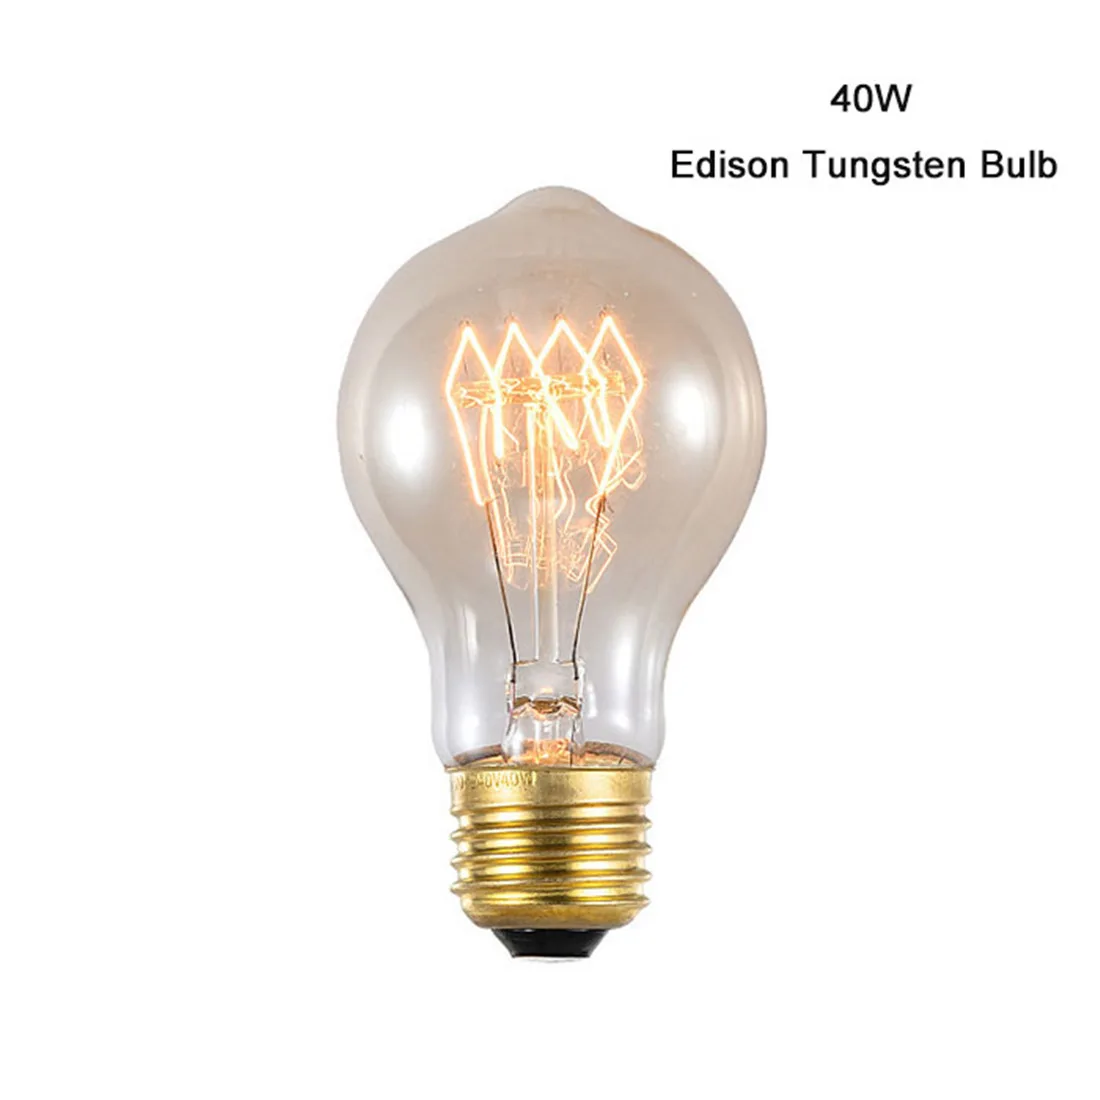 9 x CROWN LED Bombilla Edison luz cálida 1800K 3,5W EL25 230V estilo vintage base E27 iluminación regulable 